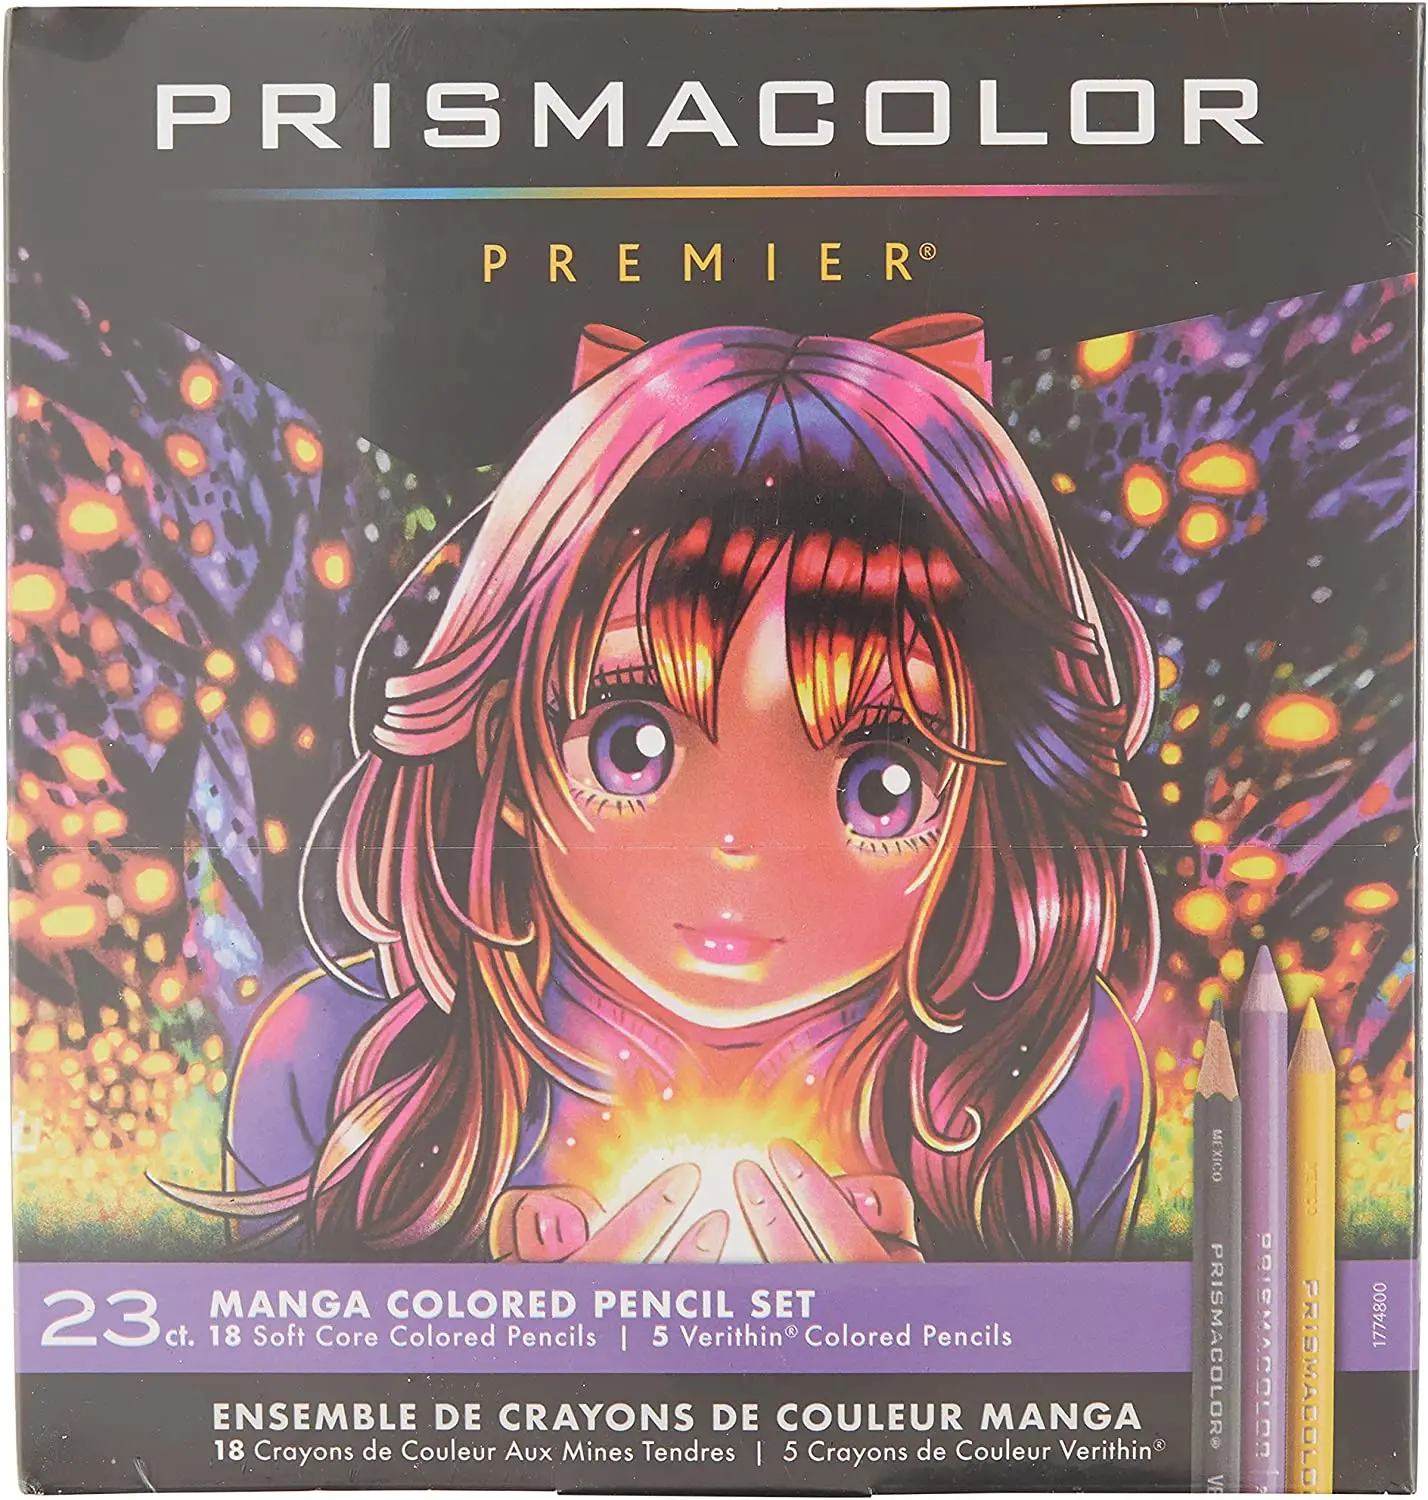 Prismacolor Marker Guide 4 by ryamcshme on DeviantArt